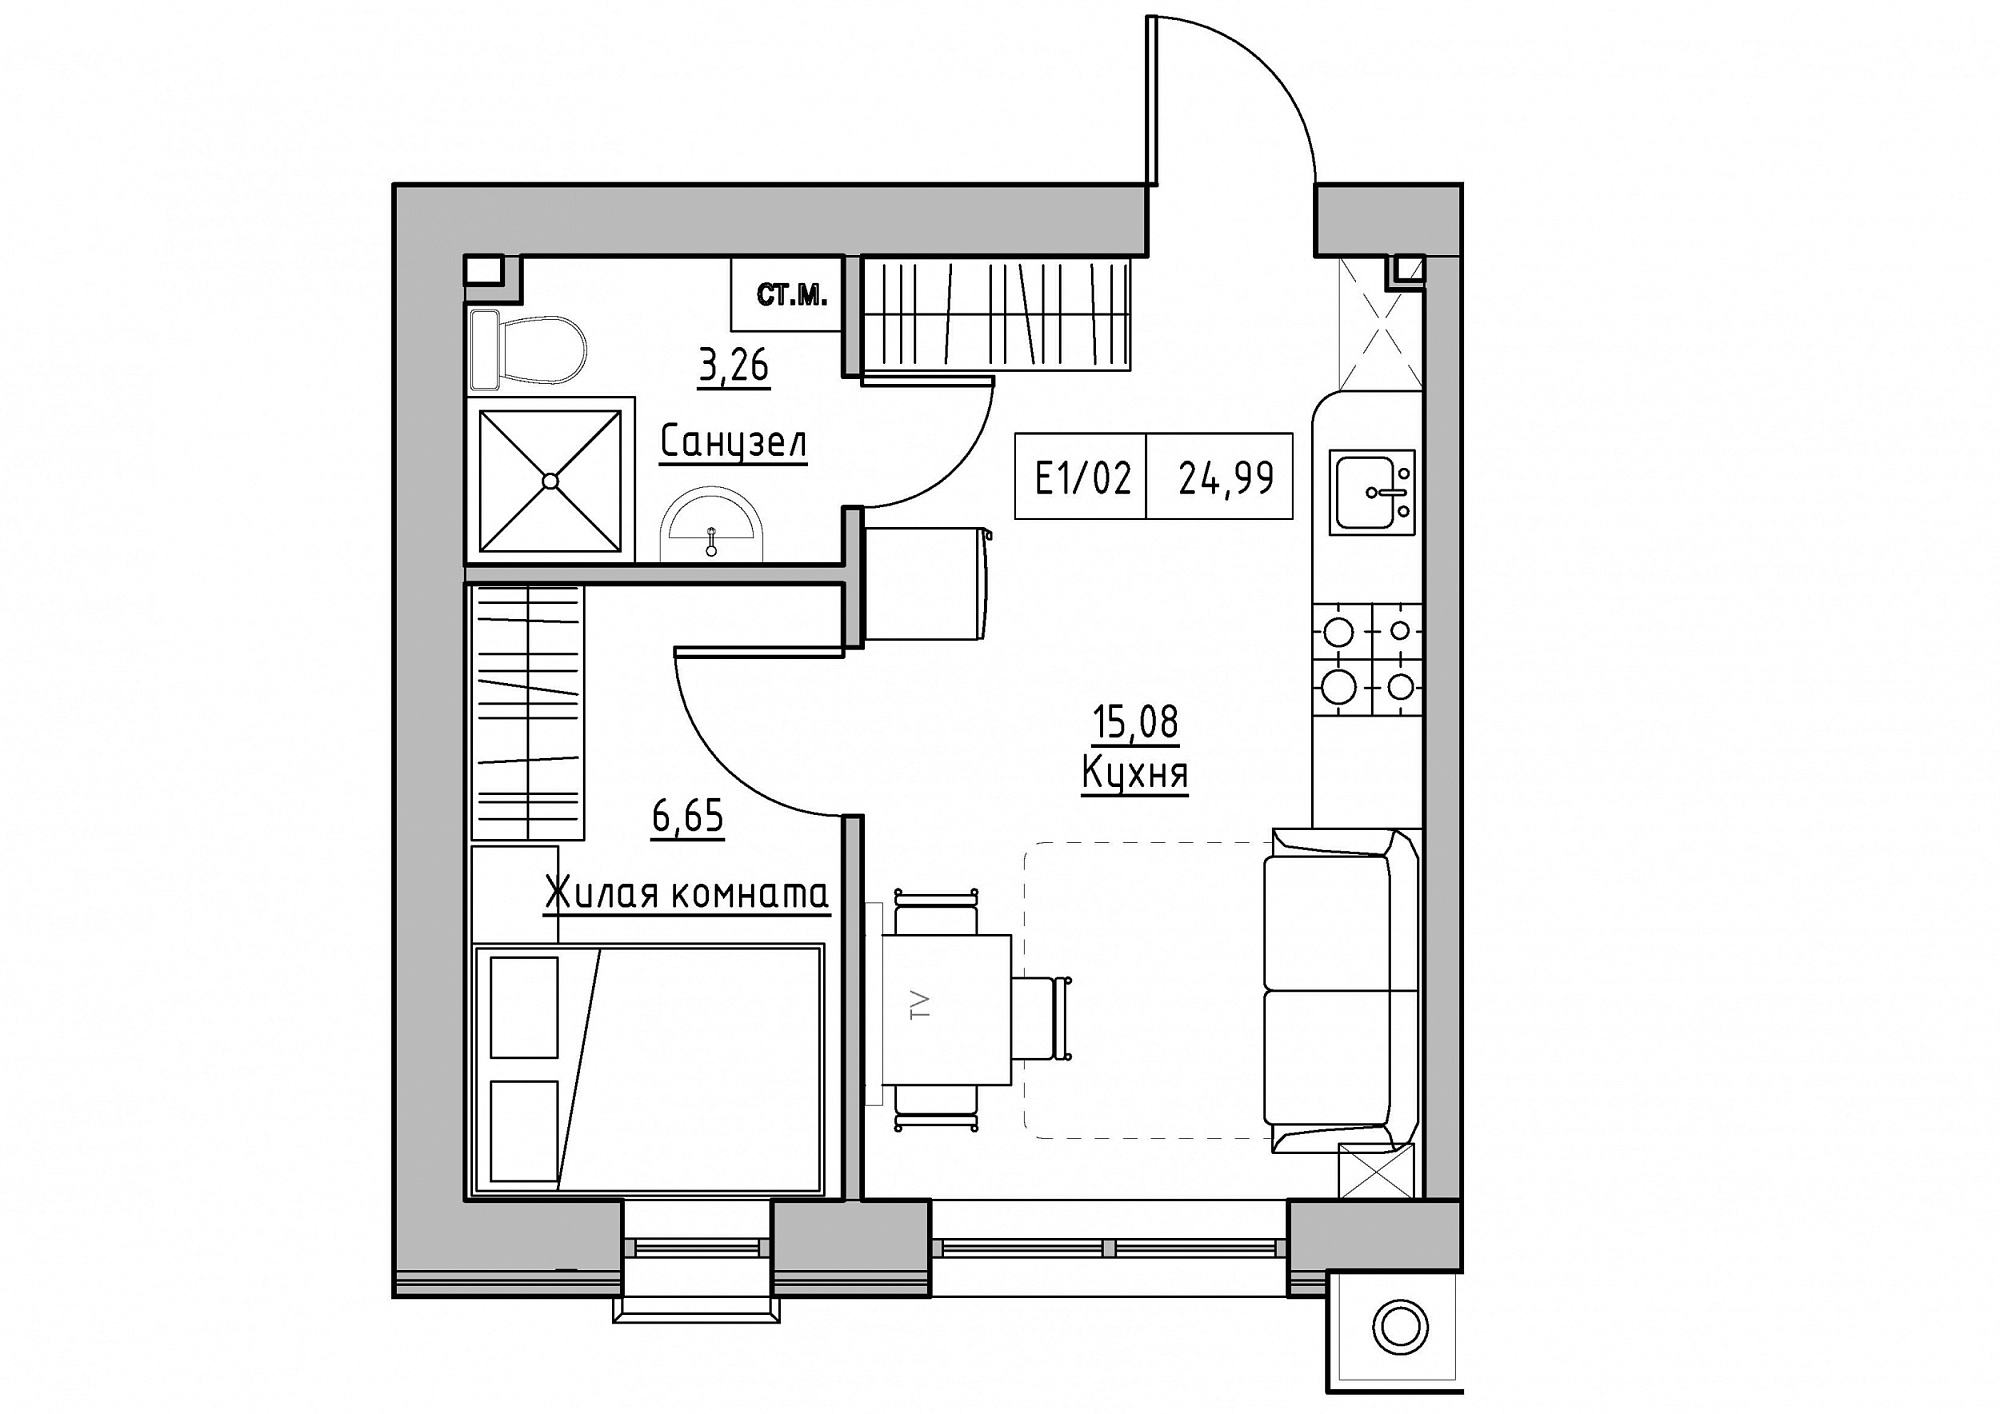 Planning 1-rm flats area 24.99m2, KS-011-03/0012.